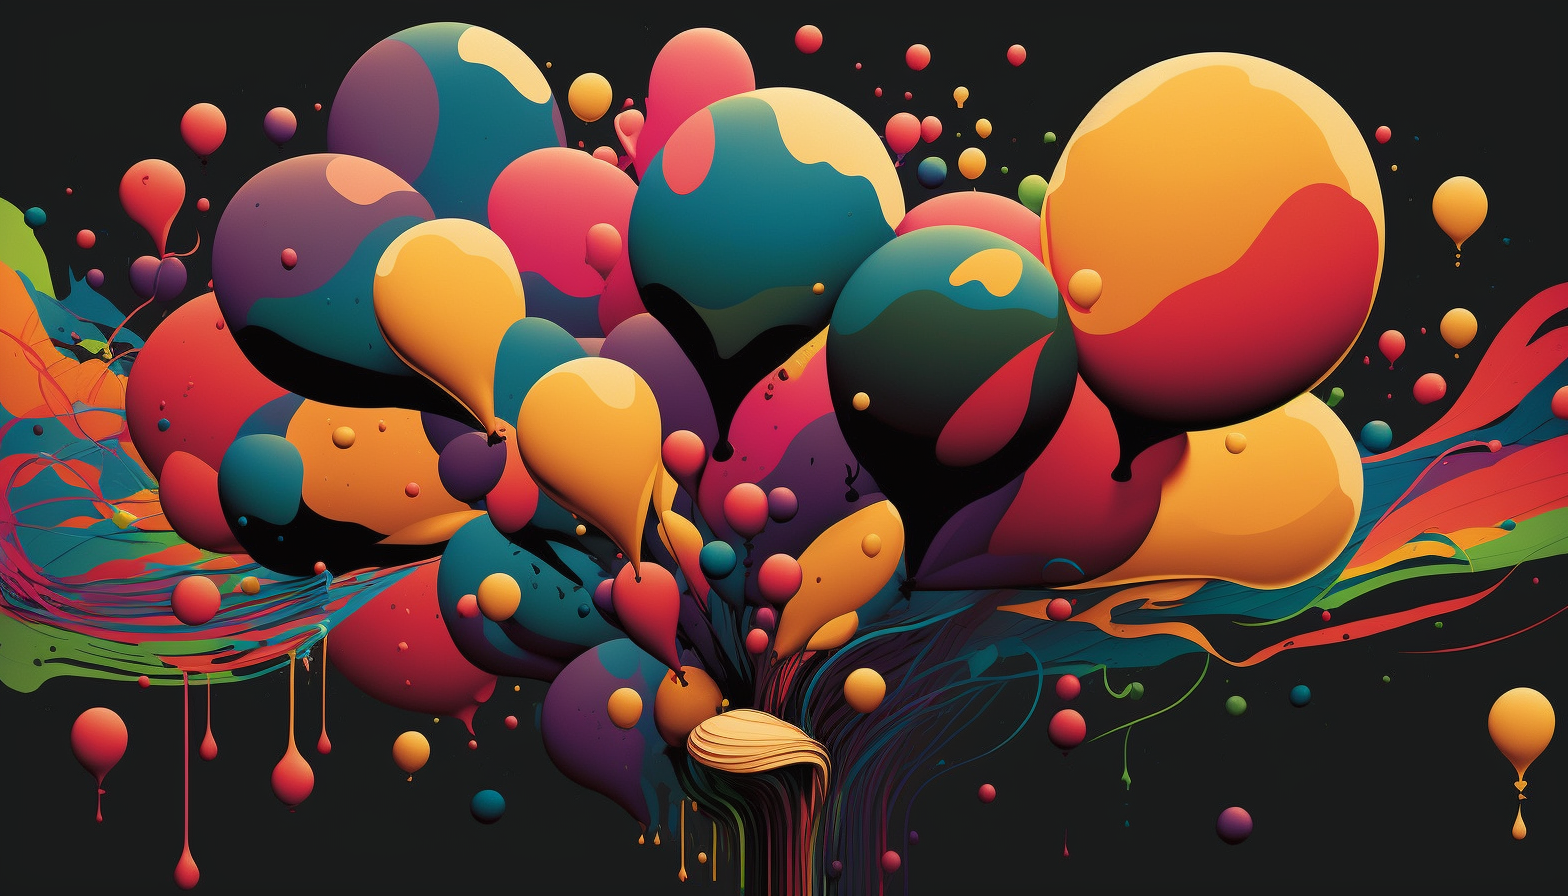 Nucco.Nick_illustration_of_colourful_balloons_de8d363b-96bb-4bc5-9282-3ff78c772bb5